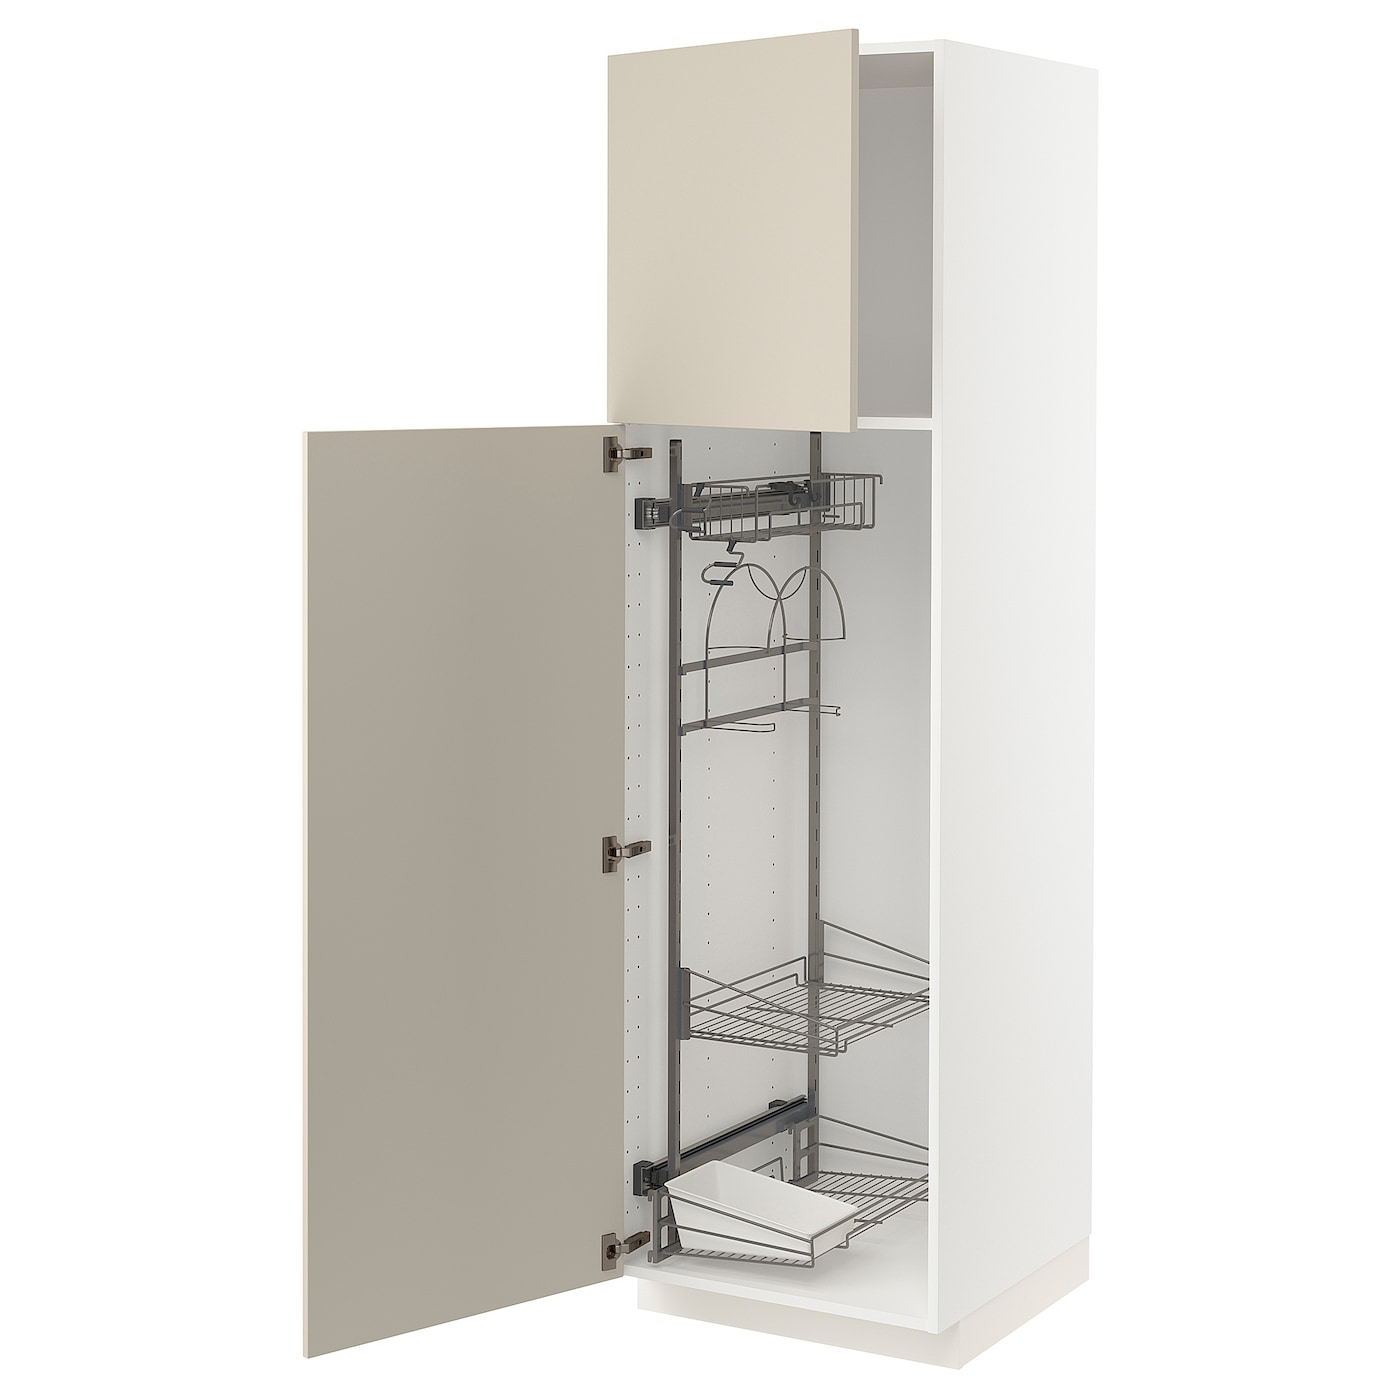 Высокий шкаф/бытовой - IKEA METOD/МЕТОД ИКЕА, 200х60х60 см, белый/бежевый